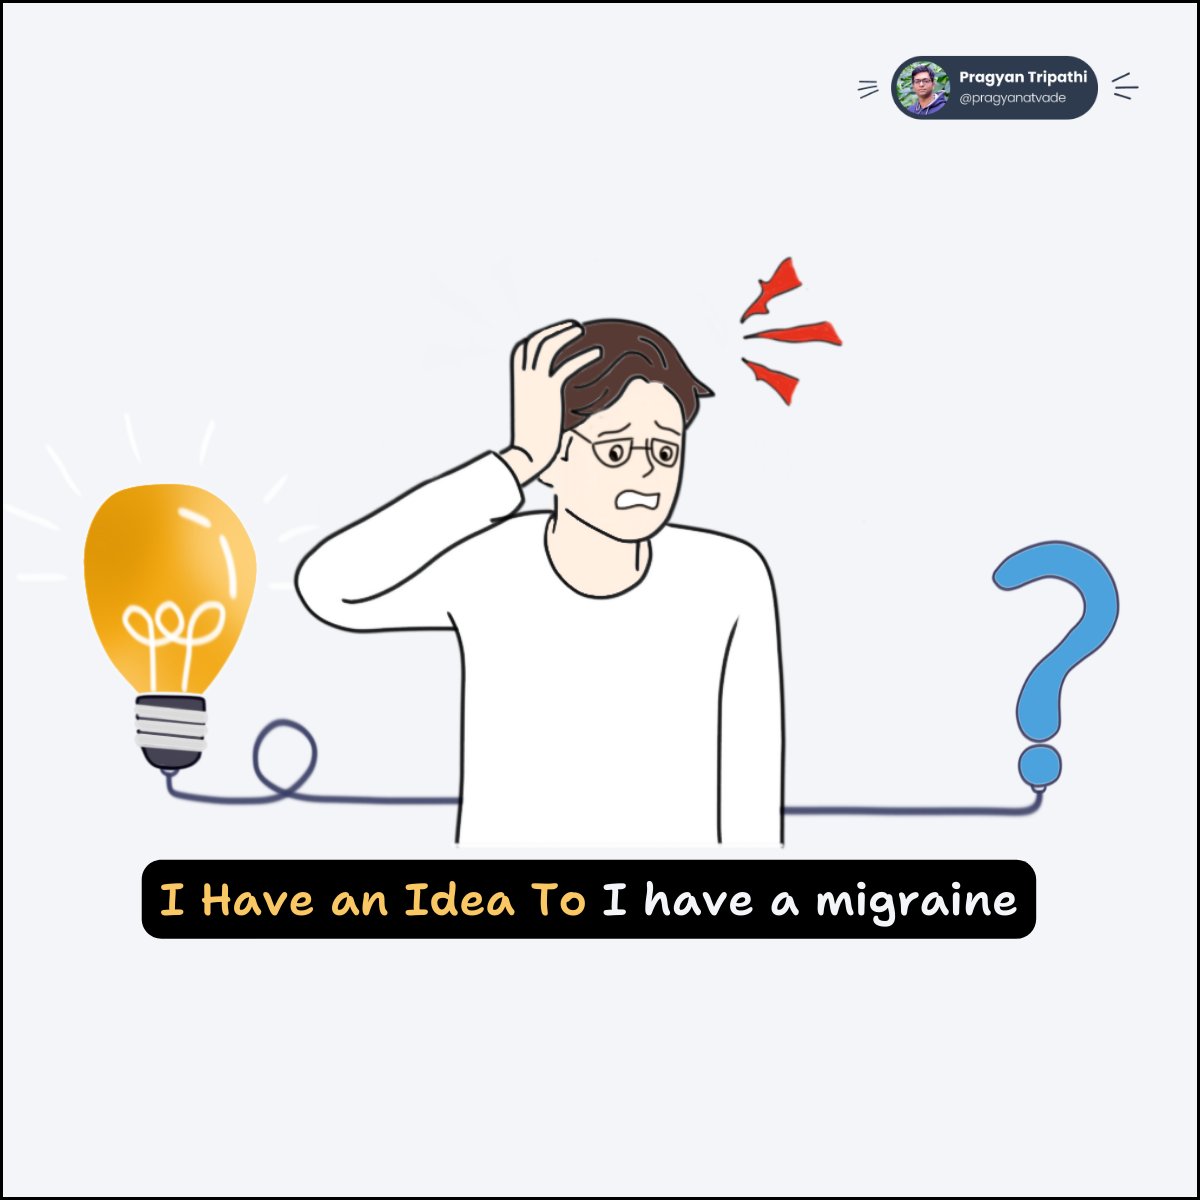 When an Idea turns into a migraine 😂 

#SaaSbusiness #businessowner #developer #businessidea